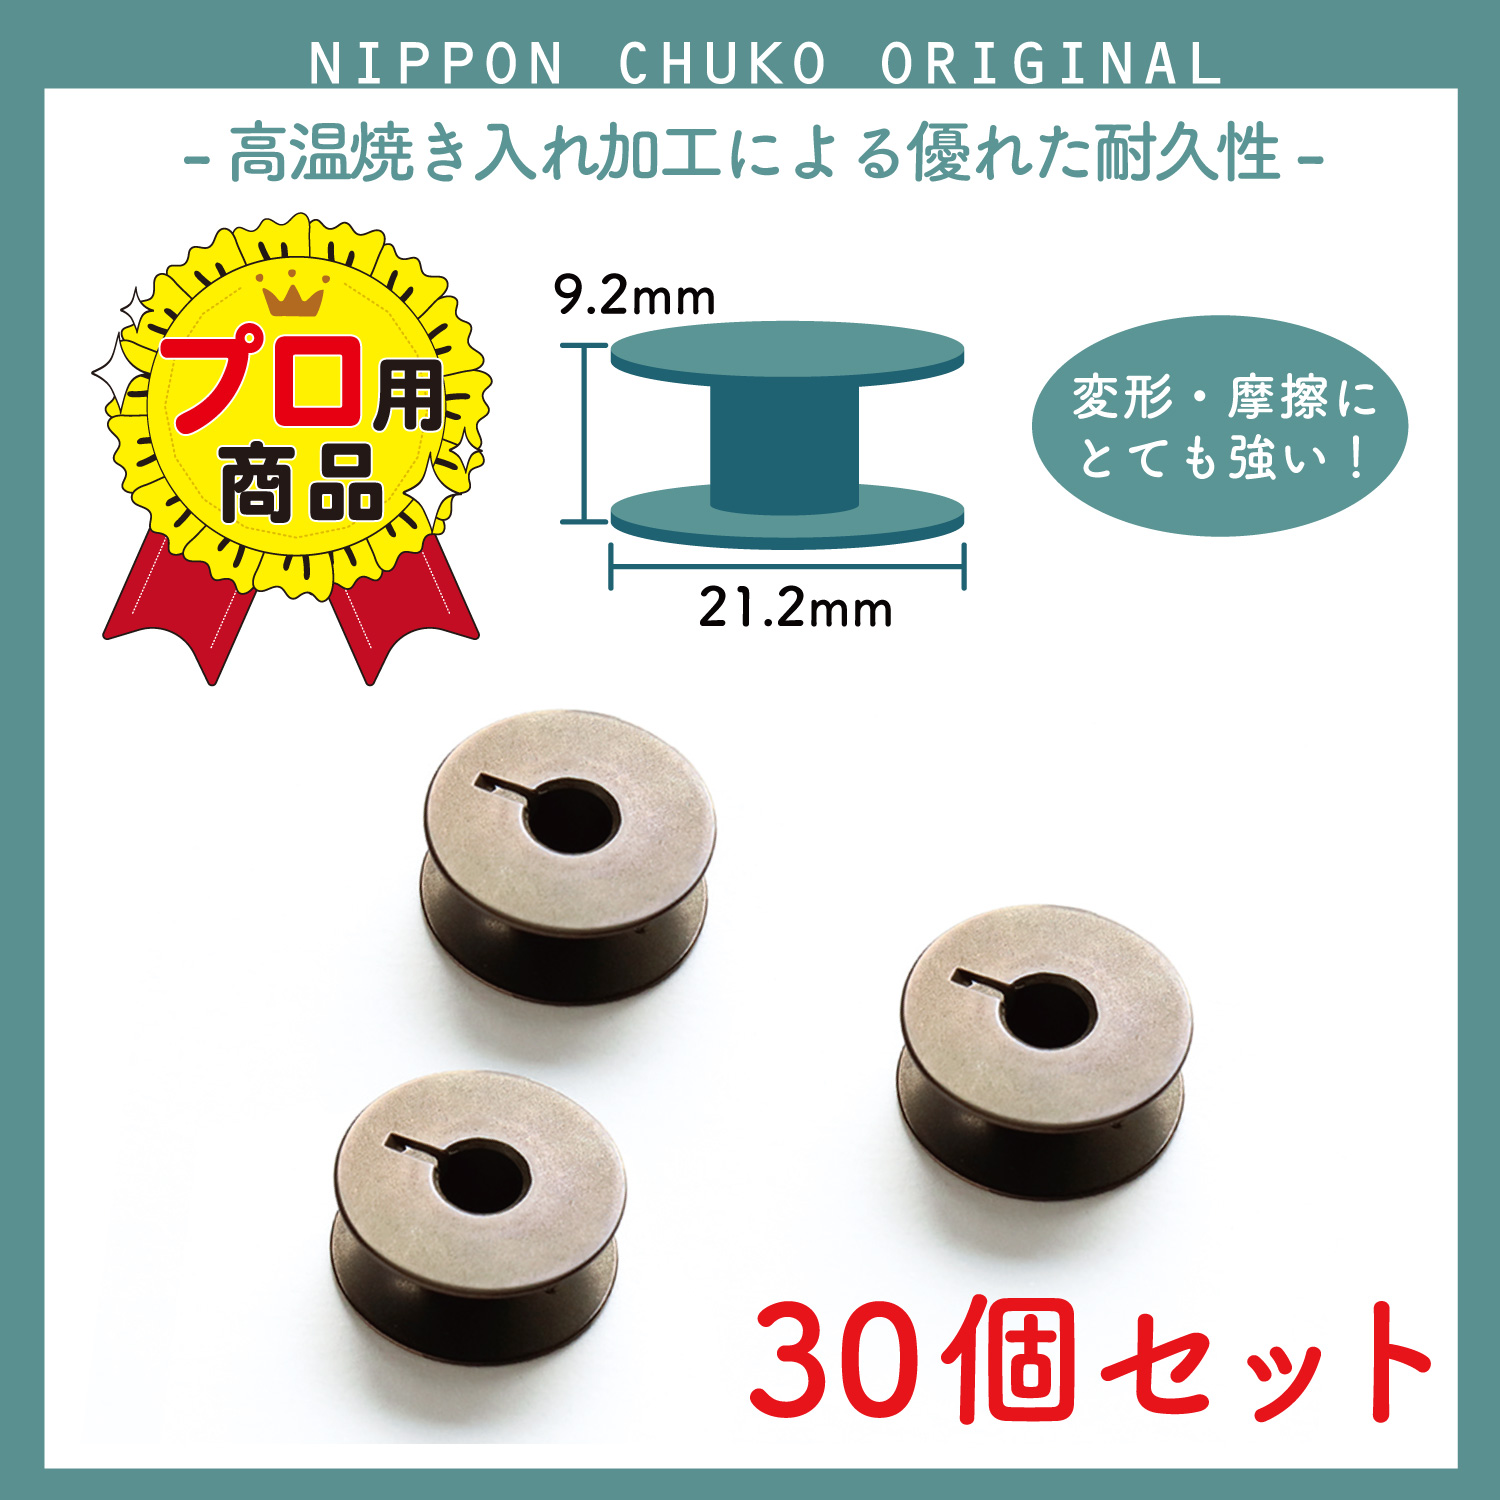 NI-02422-10 高耐久焼き入れボビン 3個入り×10袋セット (セット)